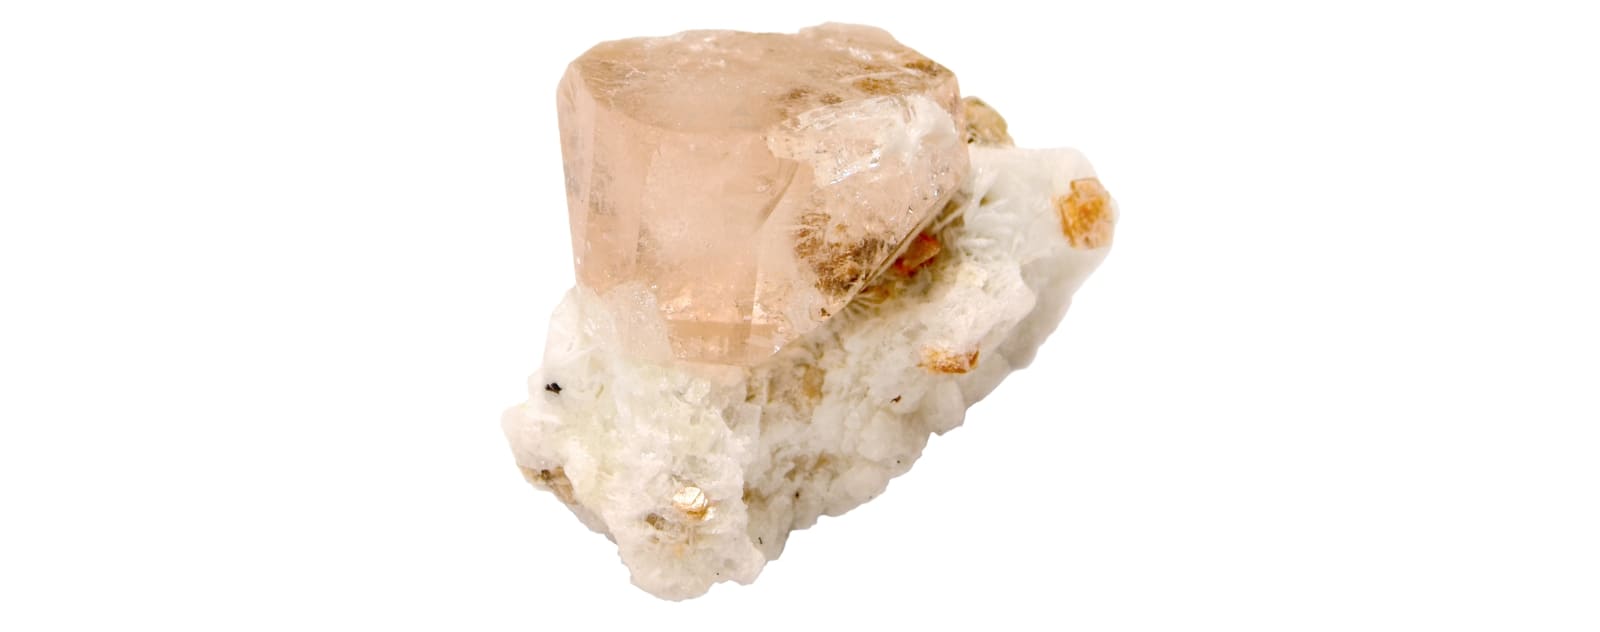 morganite qualité gemme, specimen pierre brute naturelle